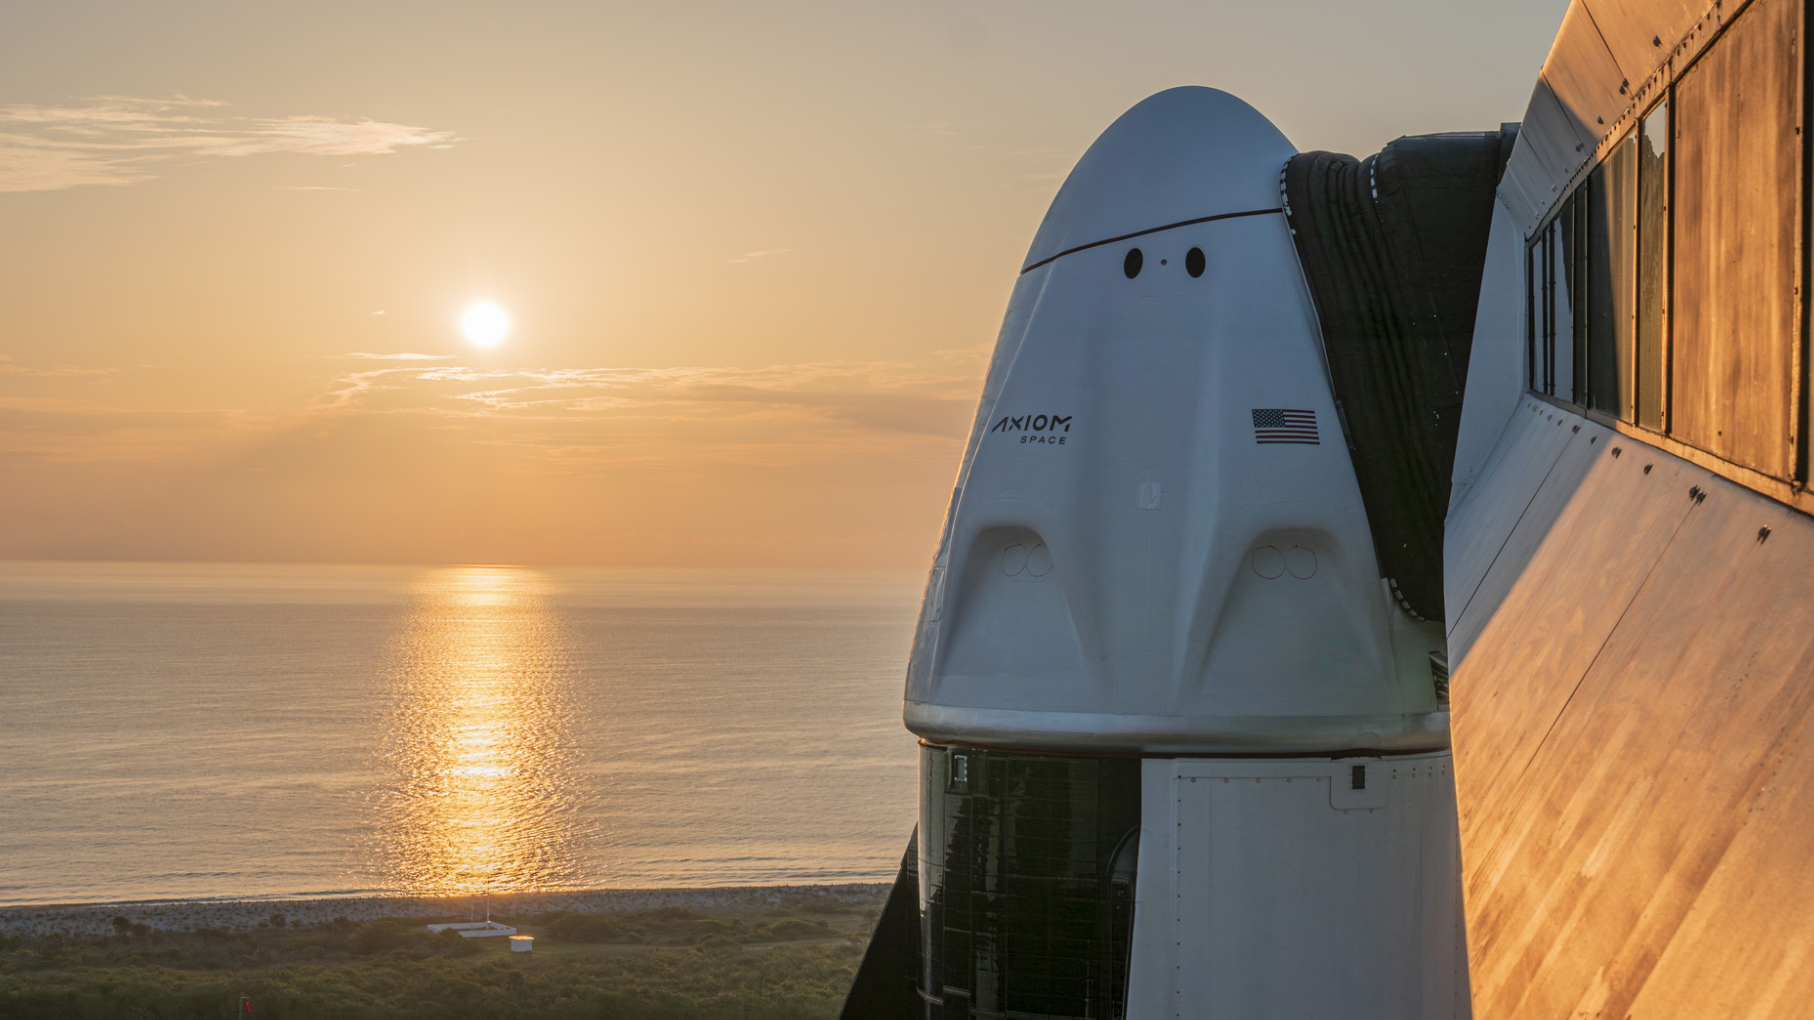 The sun rises behind Axiom Space's SpaceX Dragon capsule